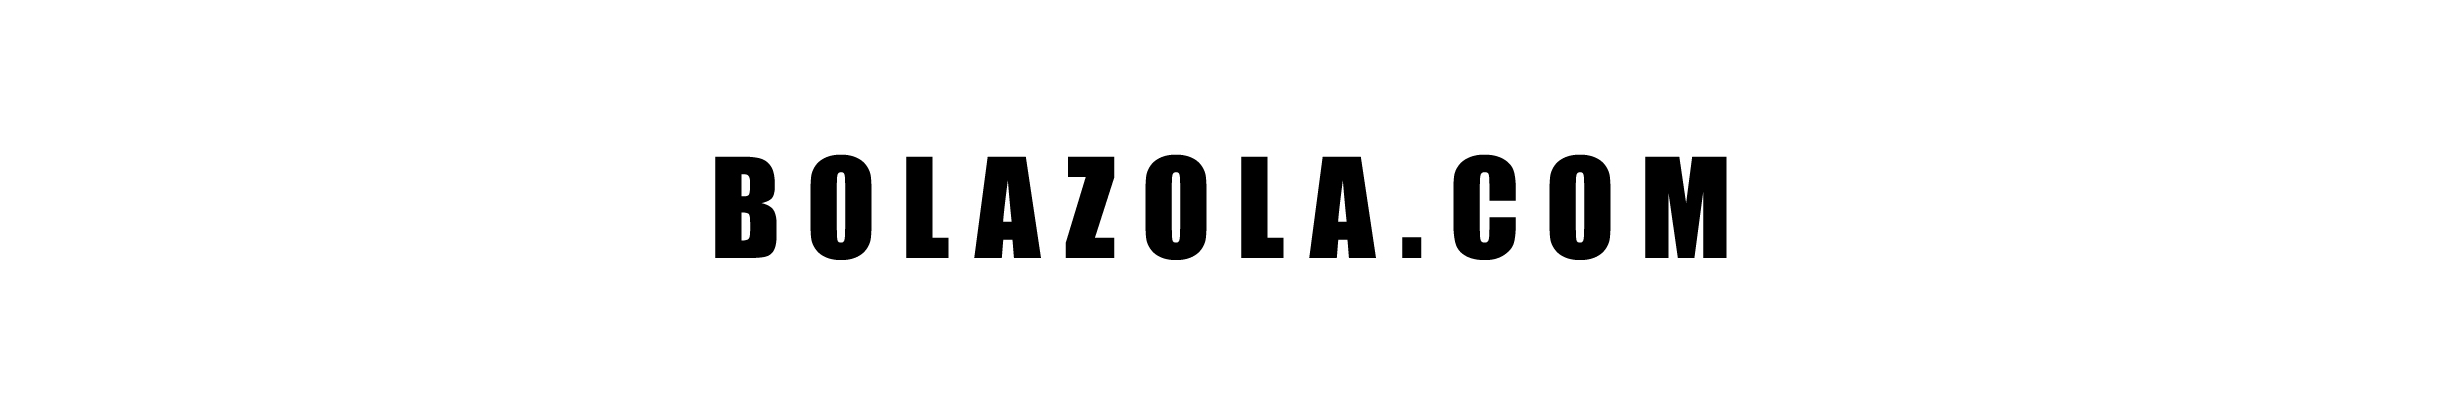 Bolazola Indonesia's profile banner